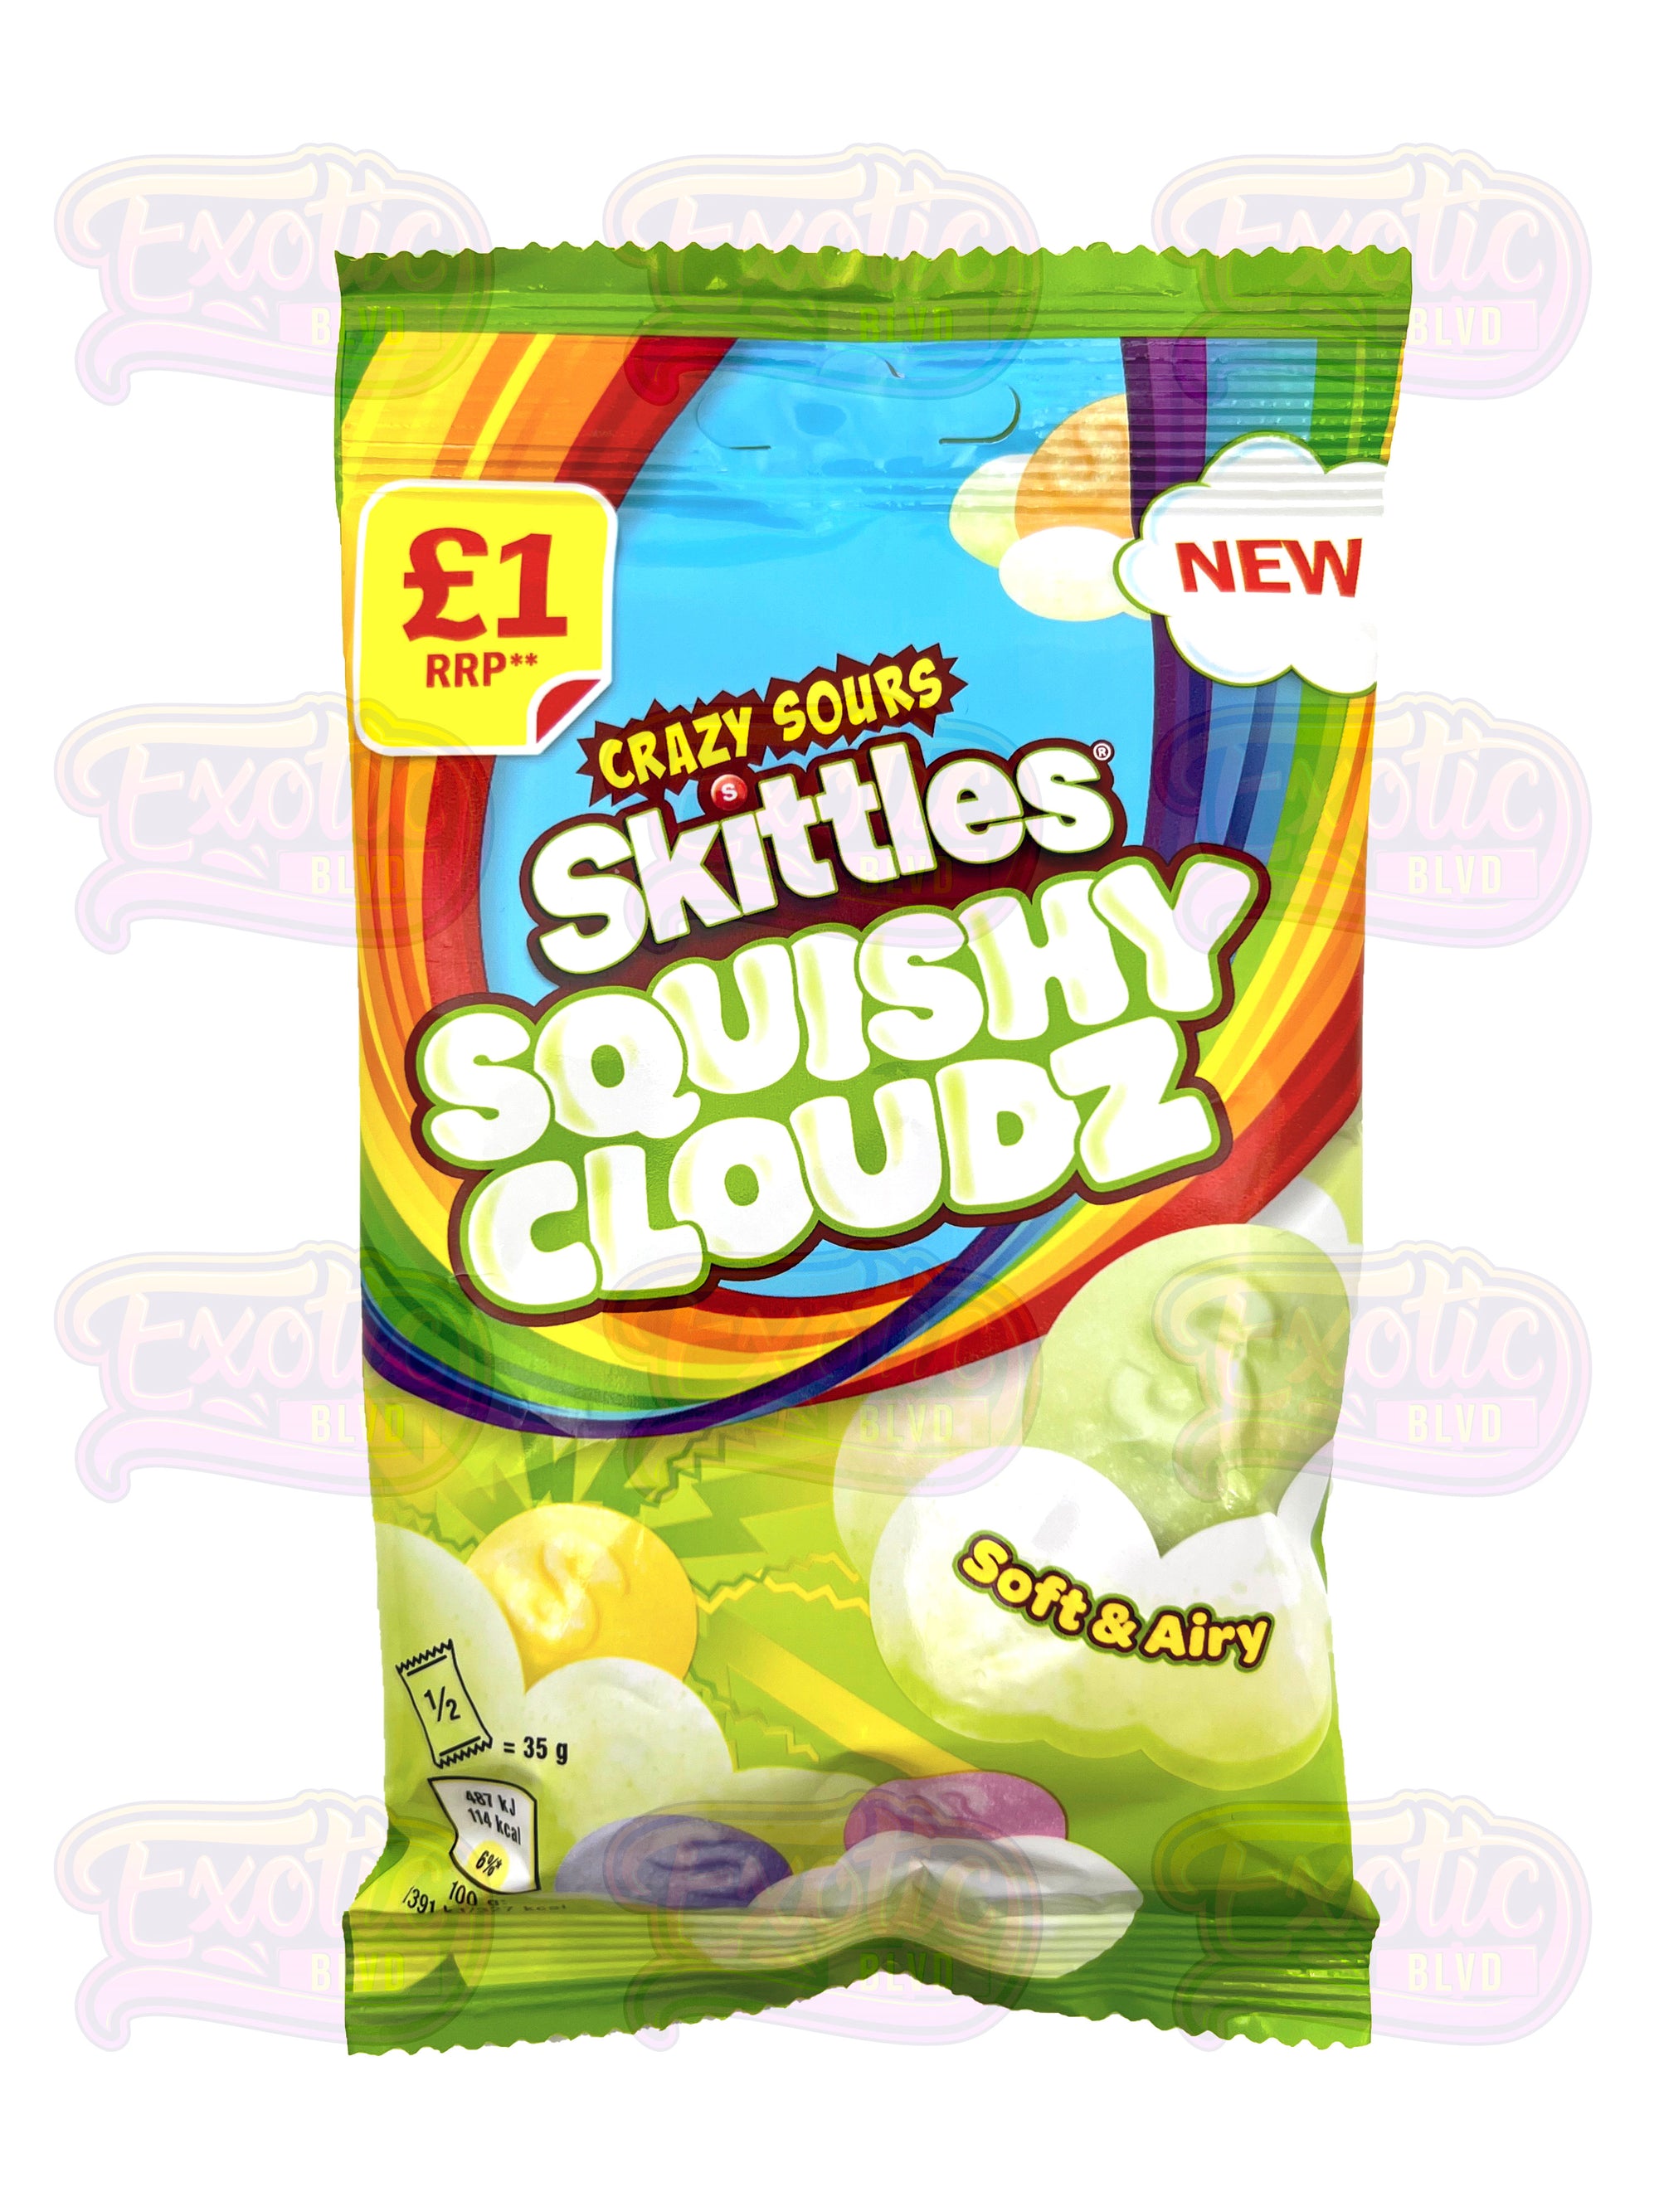 Skittles Squishy Cloudz Sours